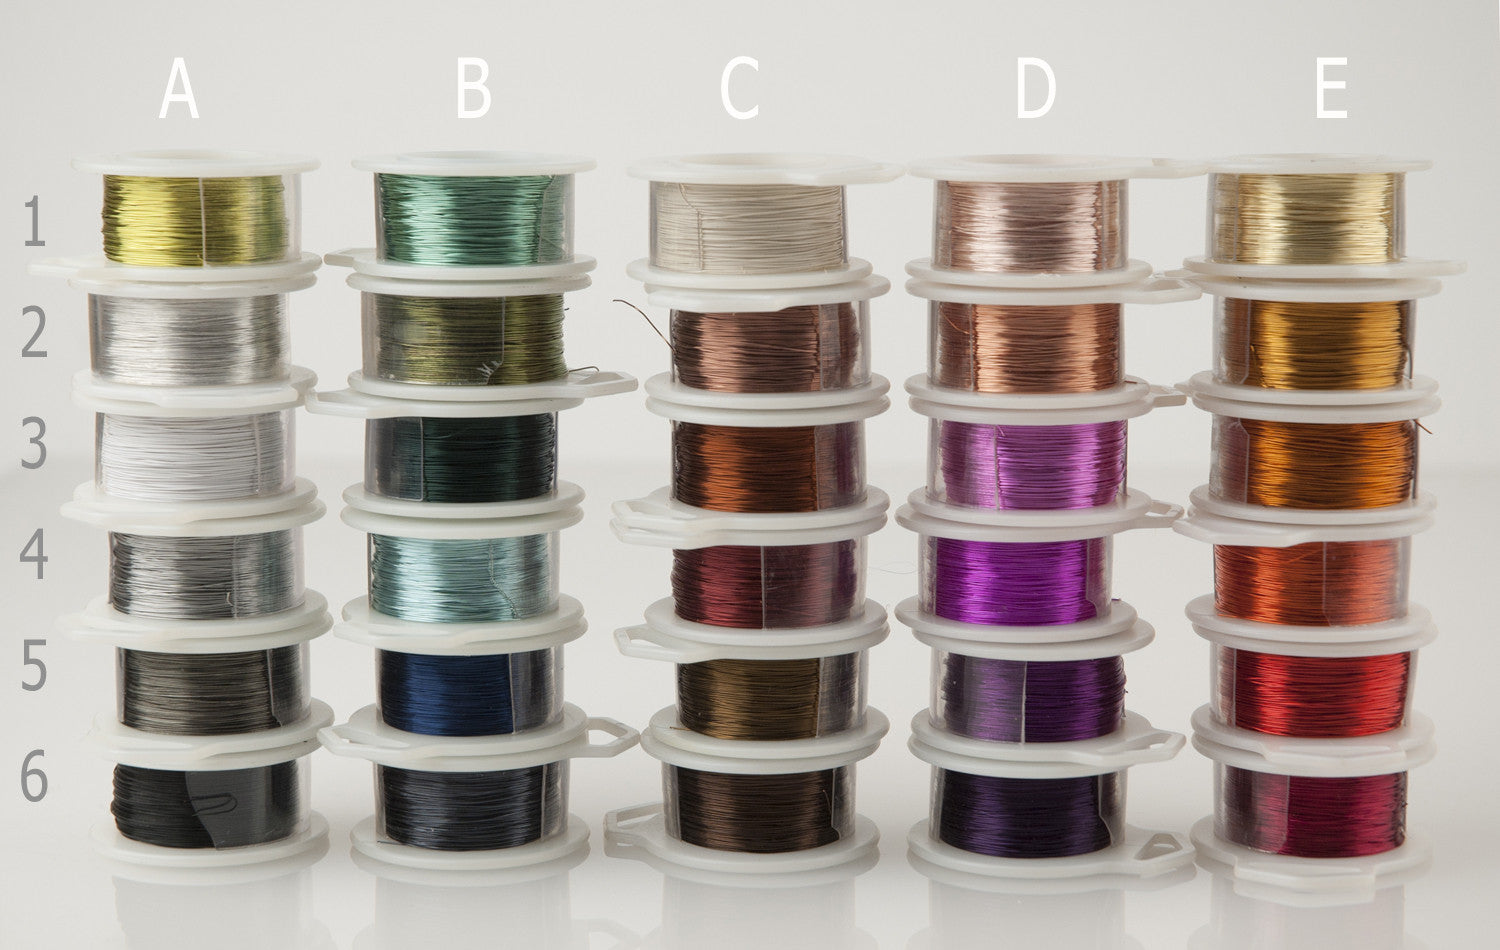 Personalized jewellery making Kit - Pick your kit combination. - Yooladesign